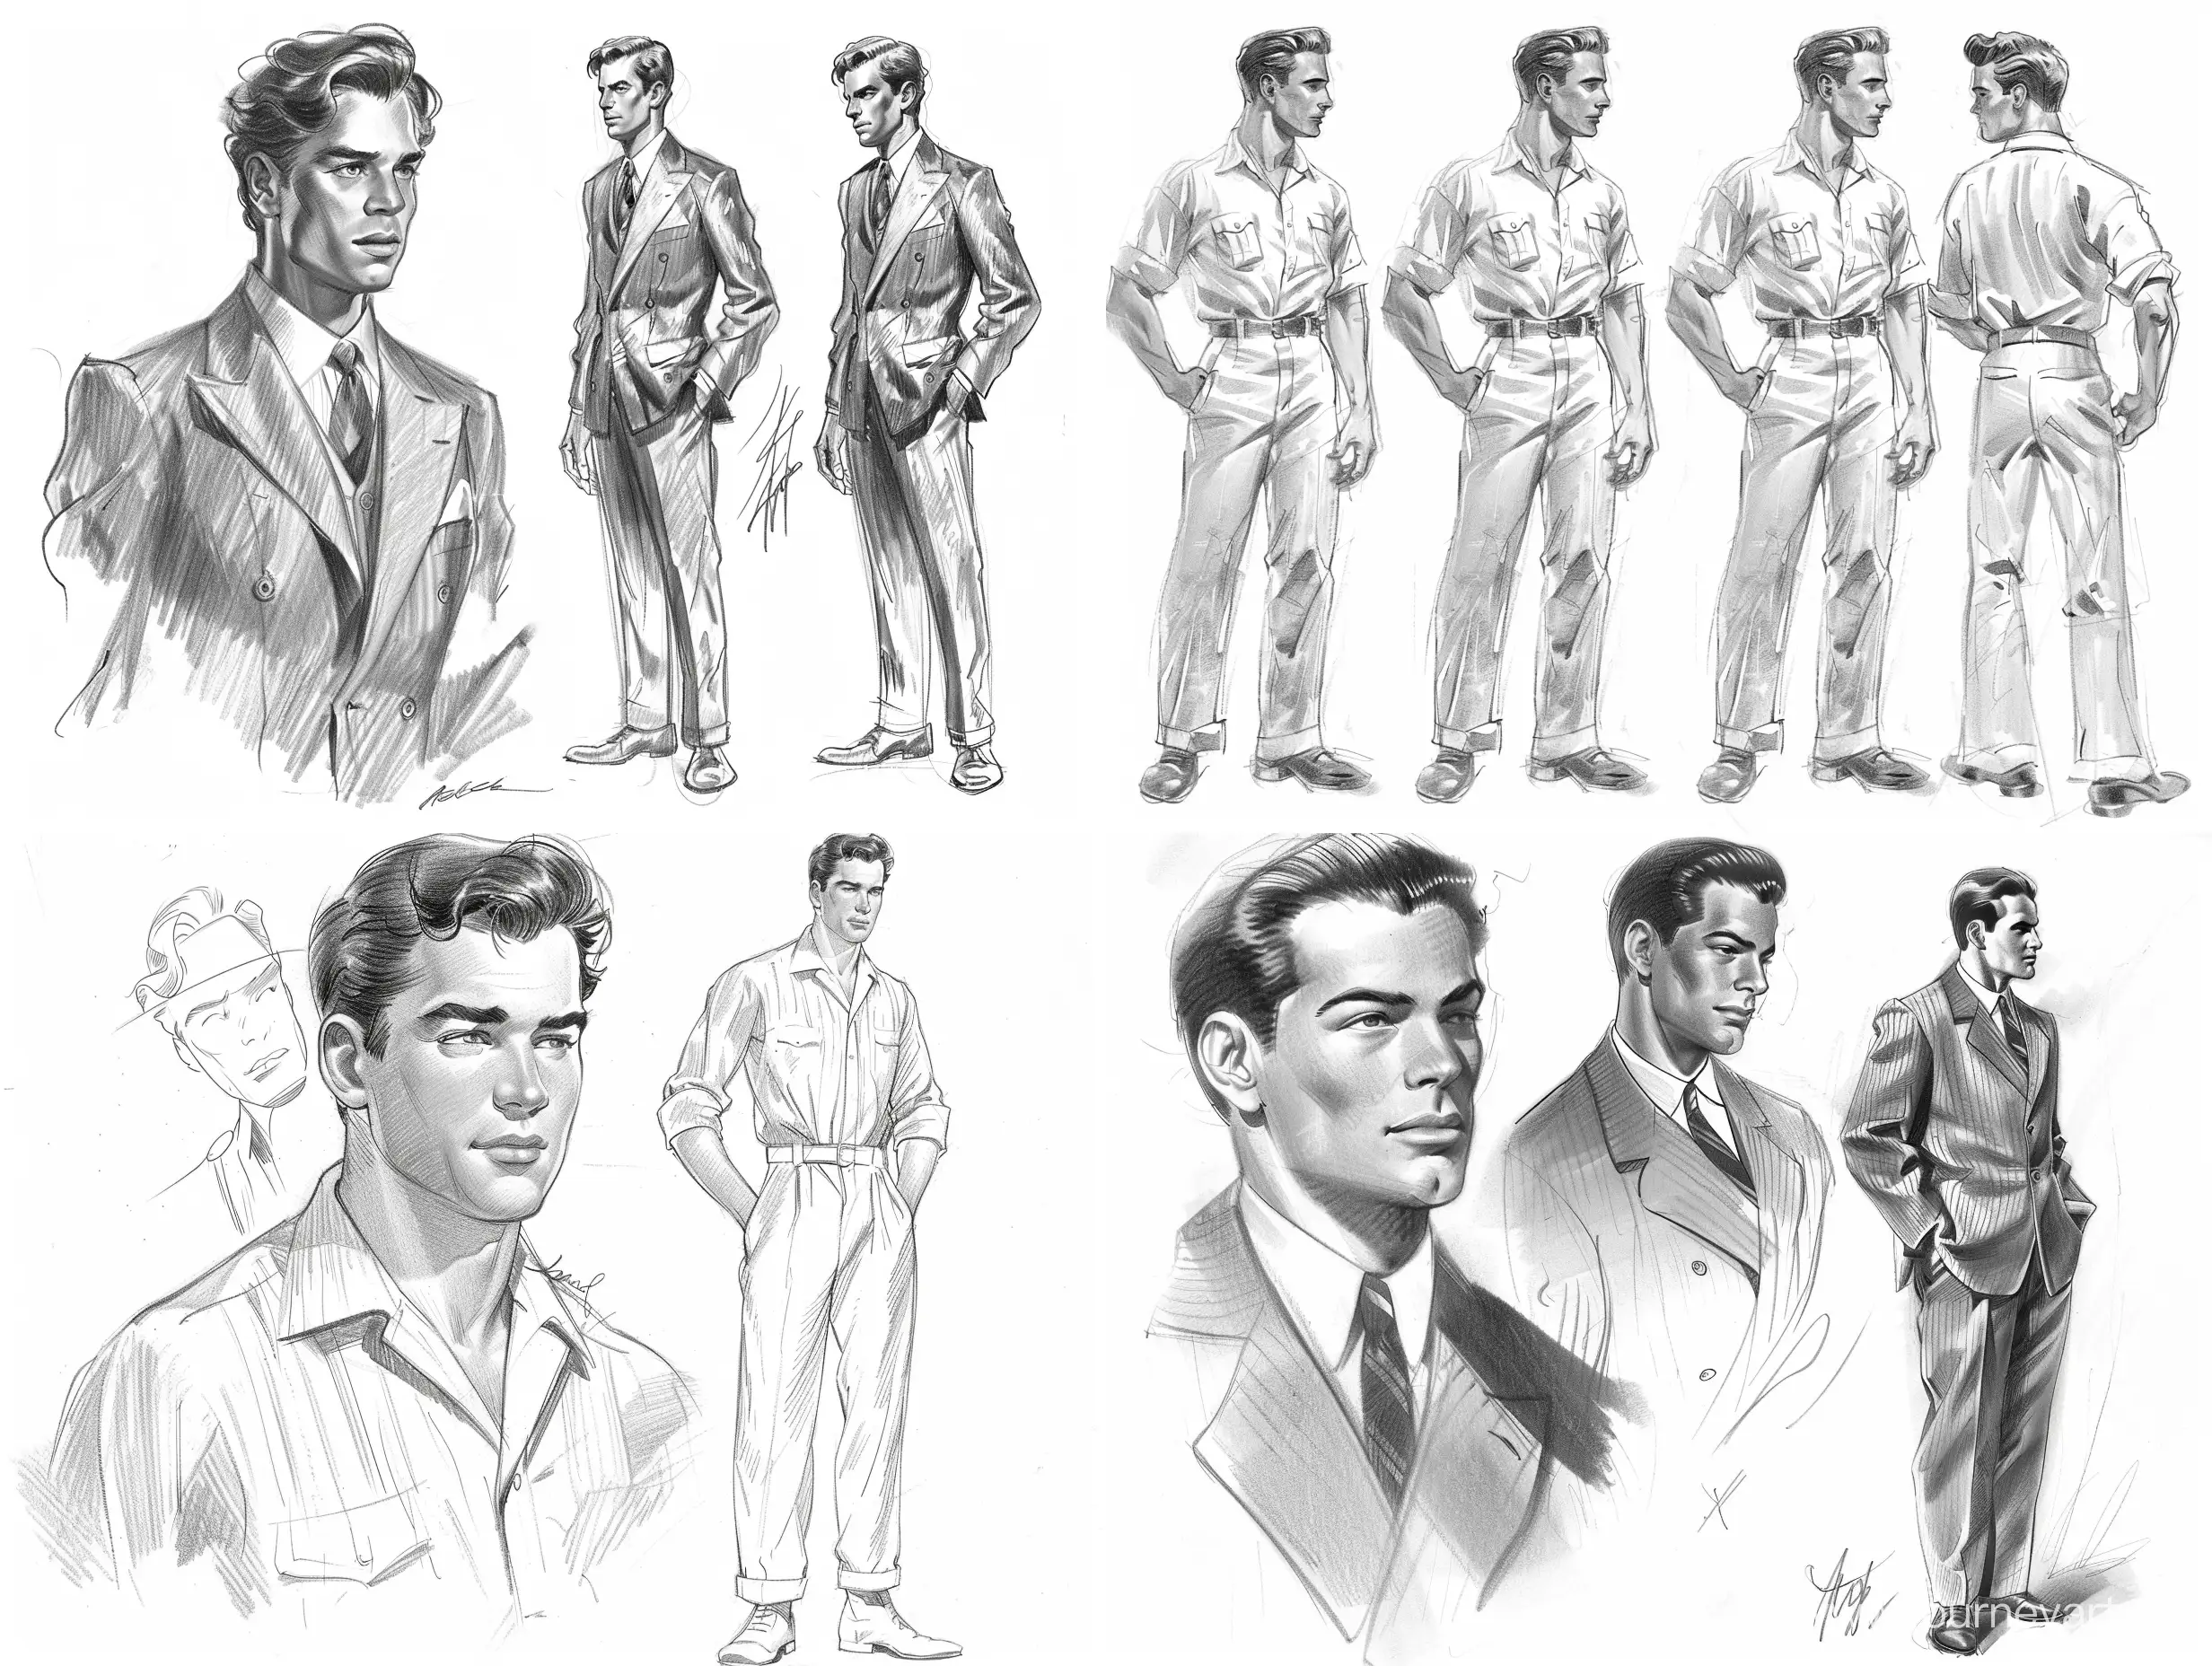 Glamorous-1940s-American-Actor-in-Andrew-Loomis-Style-Sketch